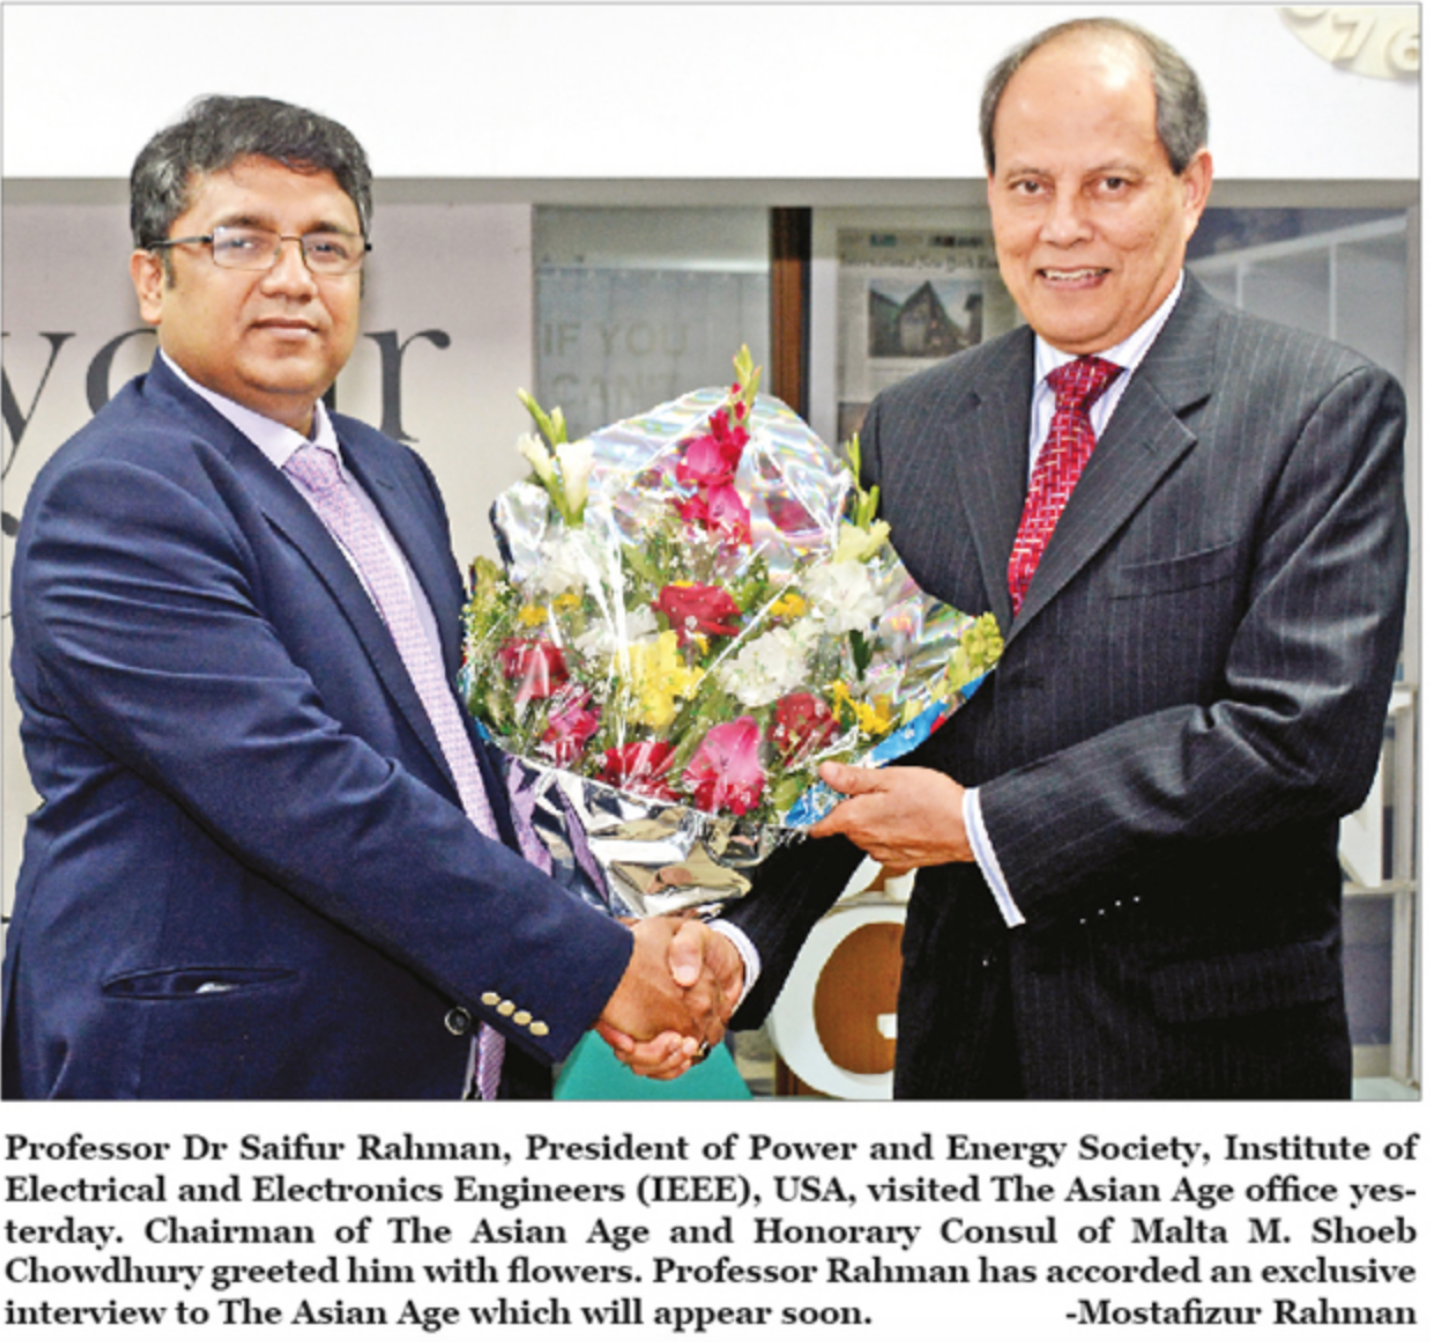 Professor Saifur Rahman with M. Shoeb Chowdhury at the Asian Age Daily